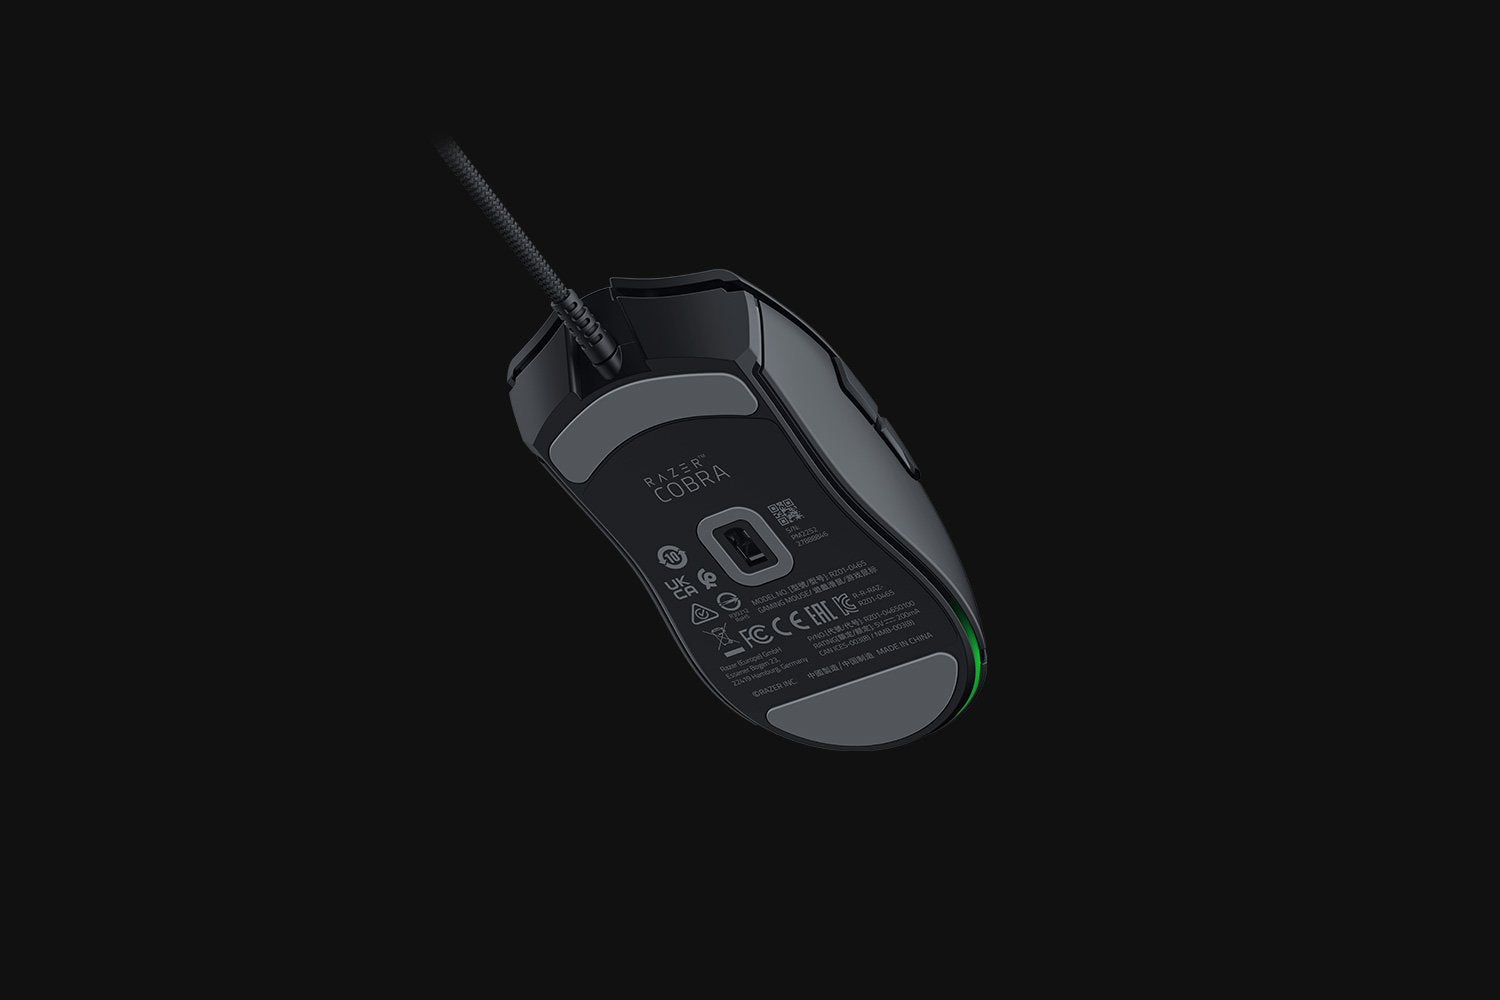 Razer Cobra Lightweight Wired Gaming Mouse with Razer Chroma™ RGB